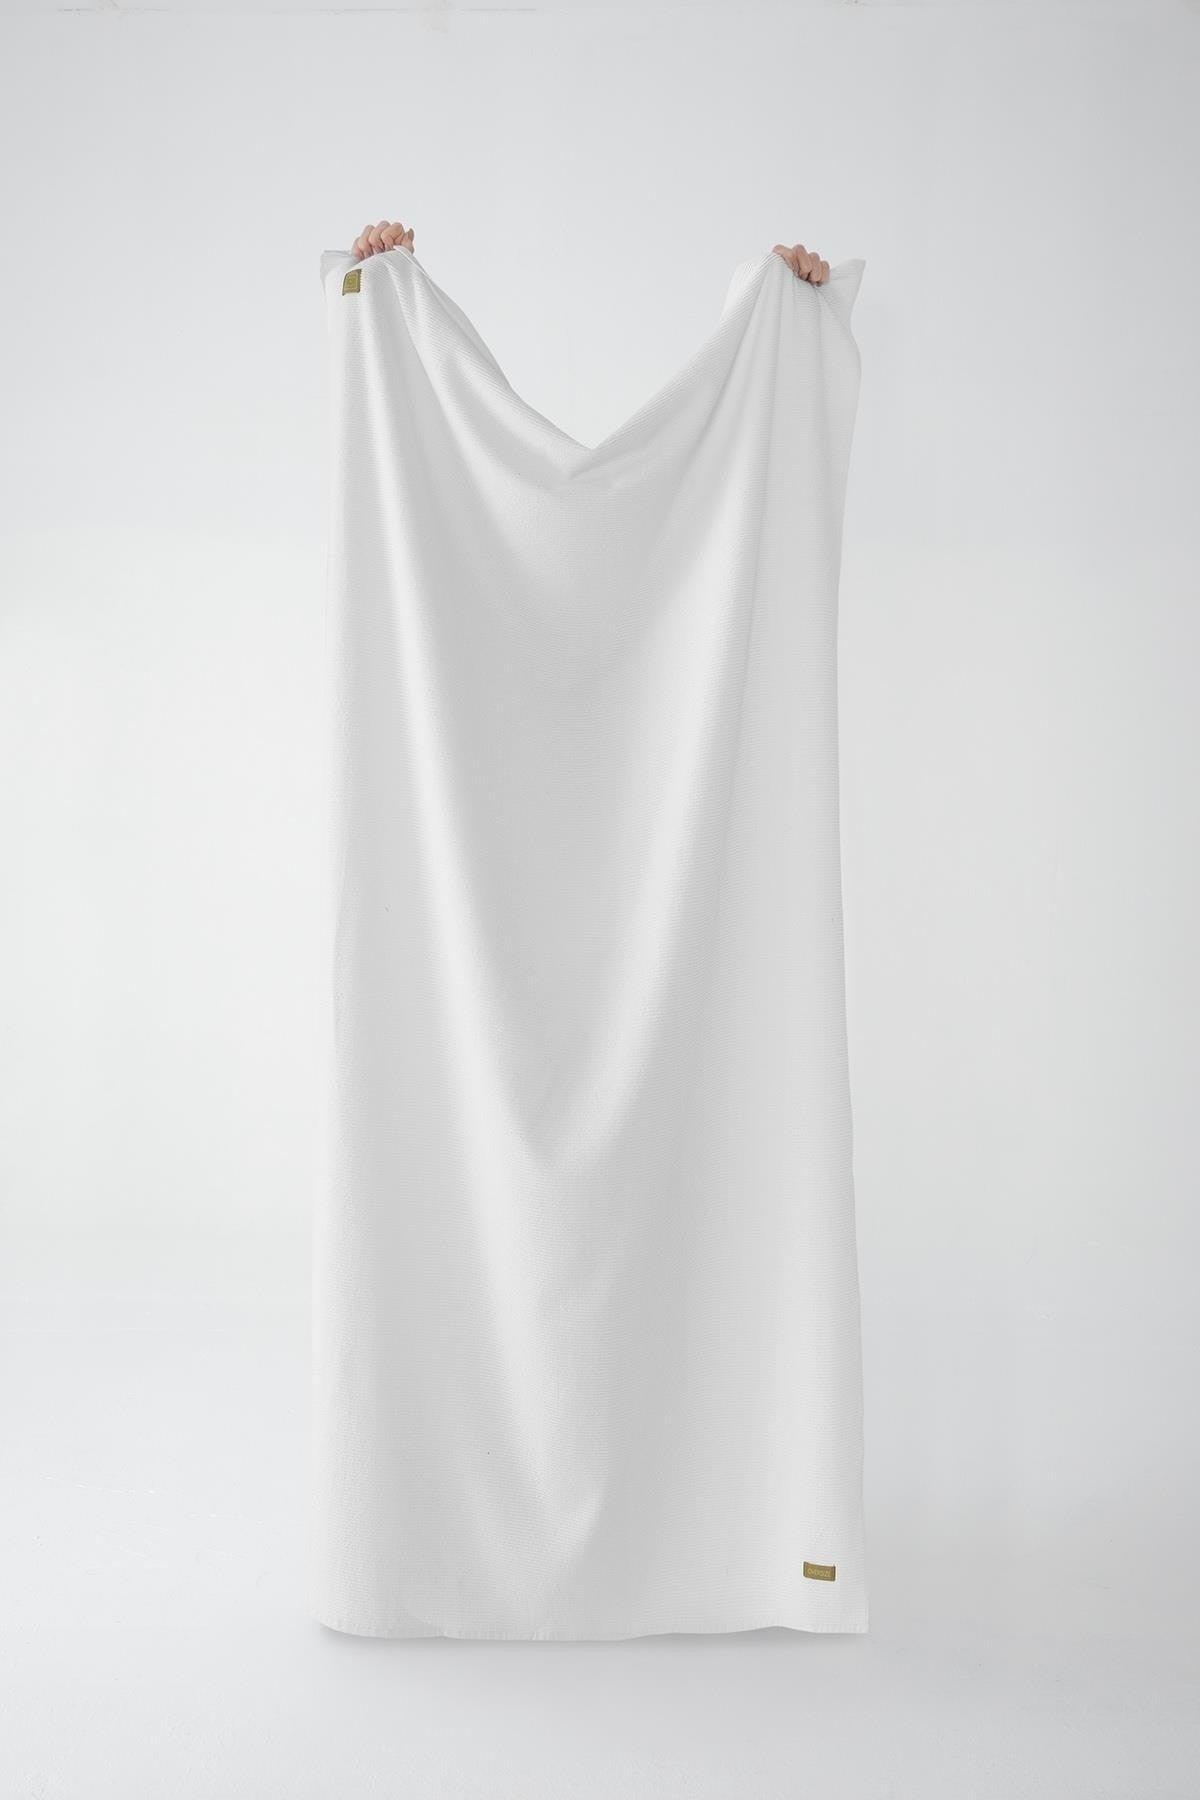 Klar - Oversize Limited Series, Extra Wide 100x150 Cm. Oversize Limited Towel 100% Cotton - Swordslife